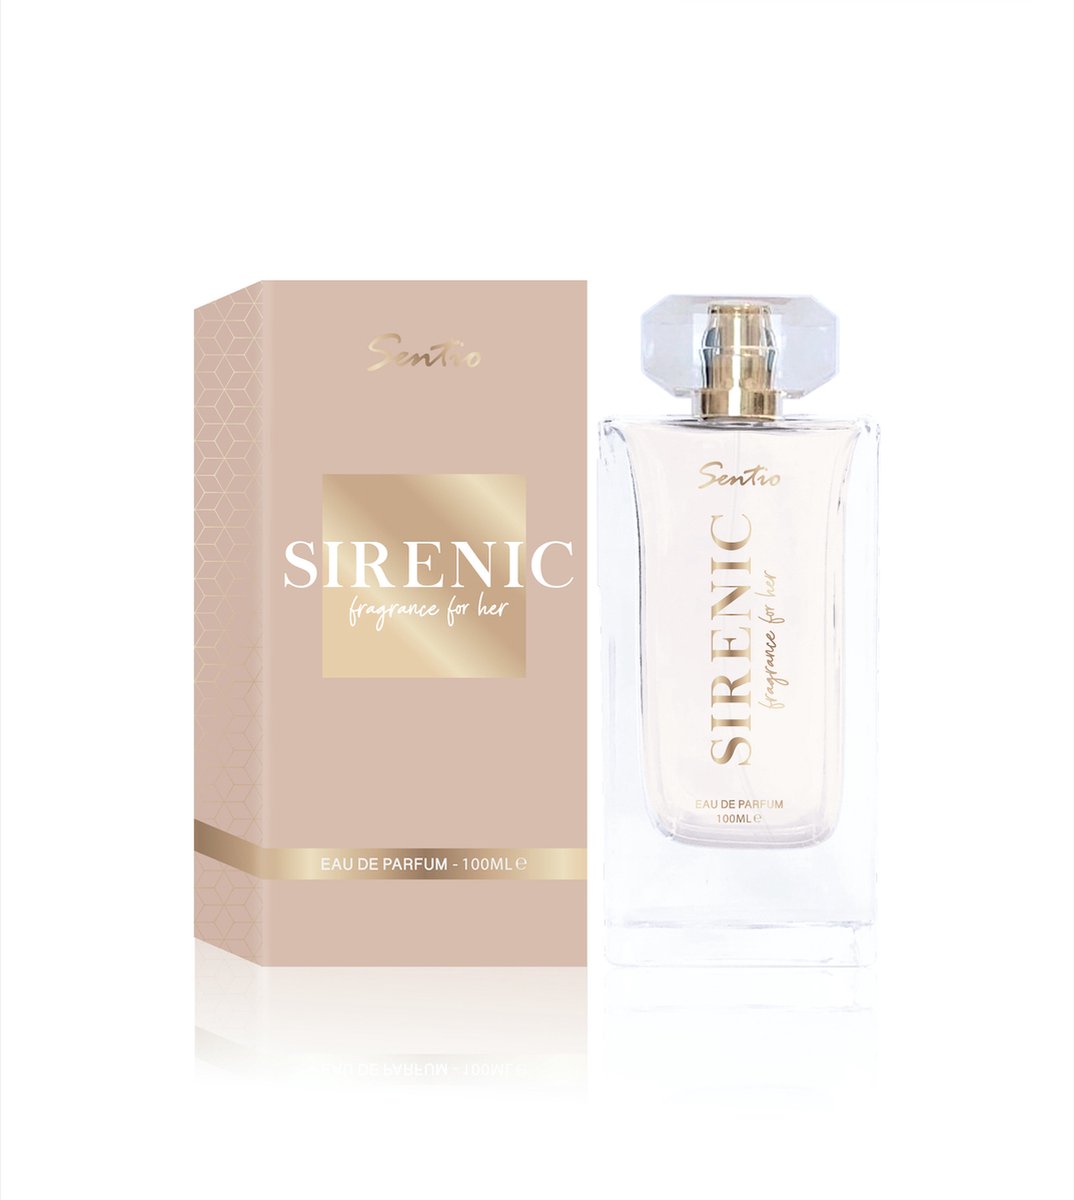 Sentio Sirenic 100ml Eau de Parfum